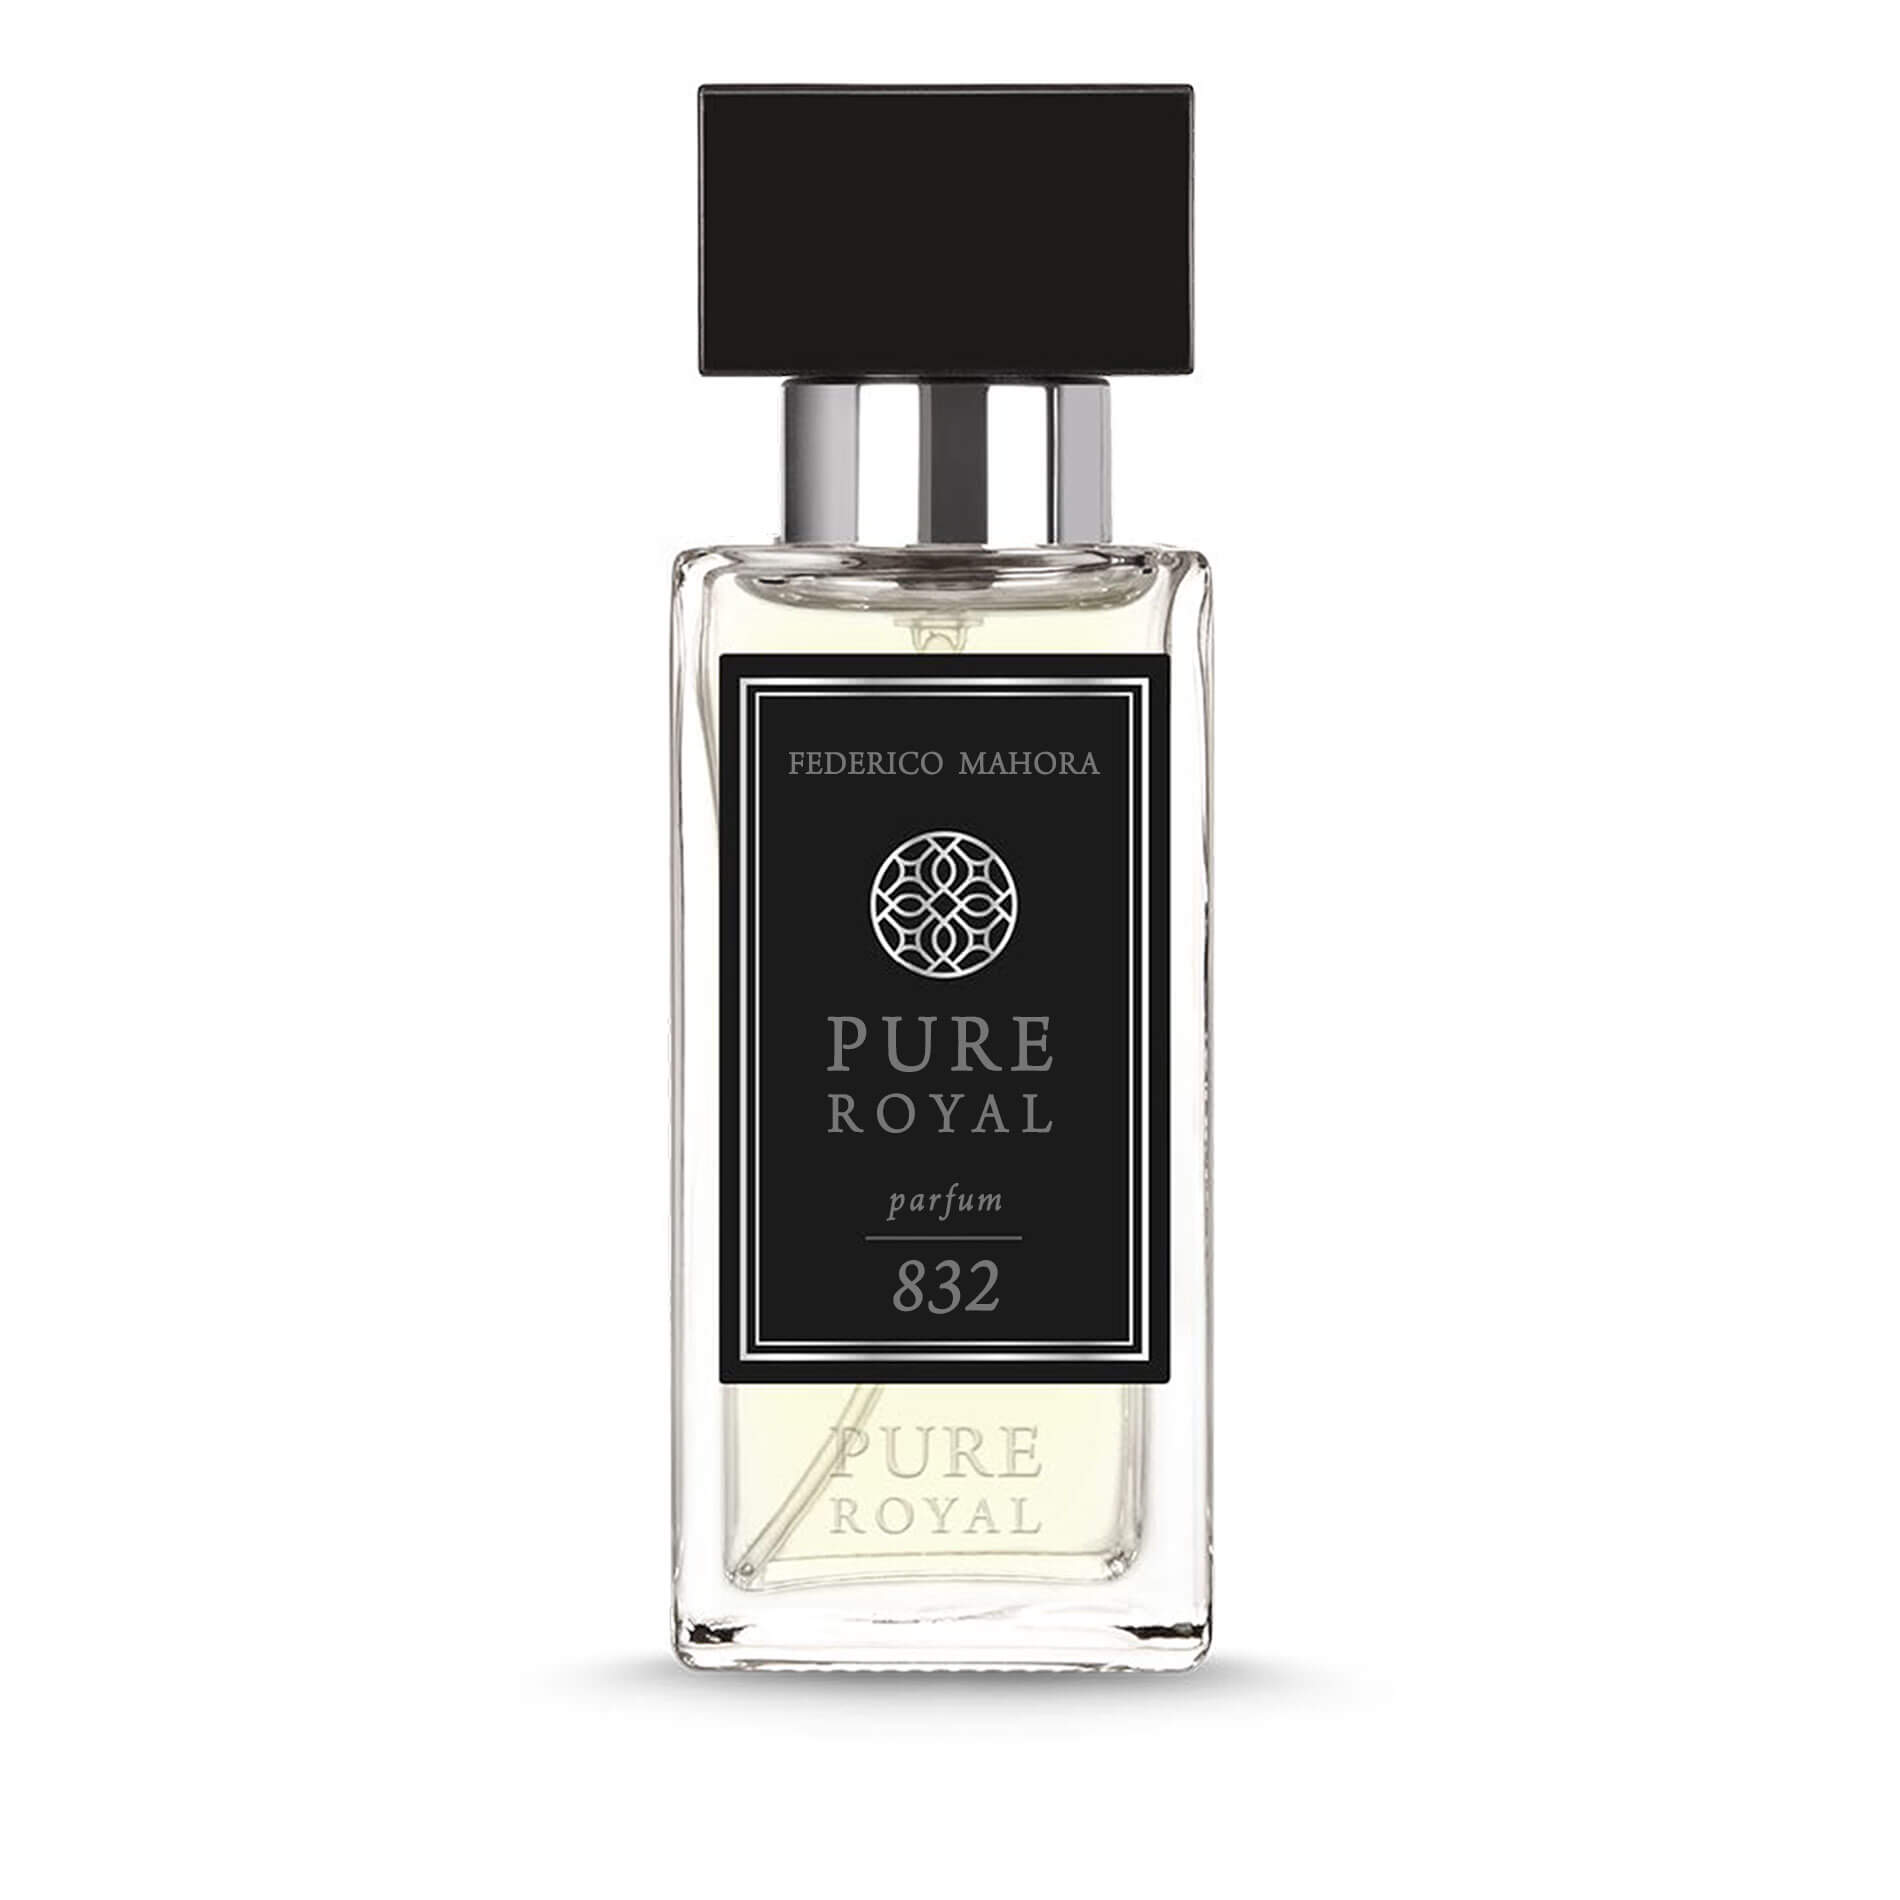 PURE ROYAL 832 Parfum by Federico Mahora